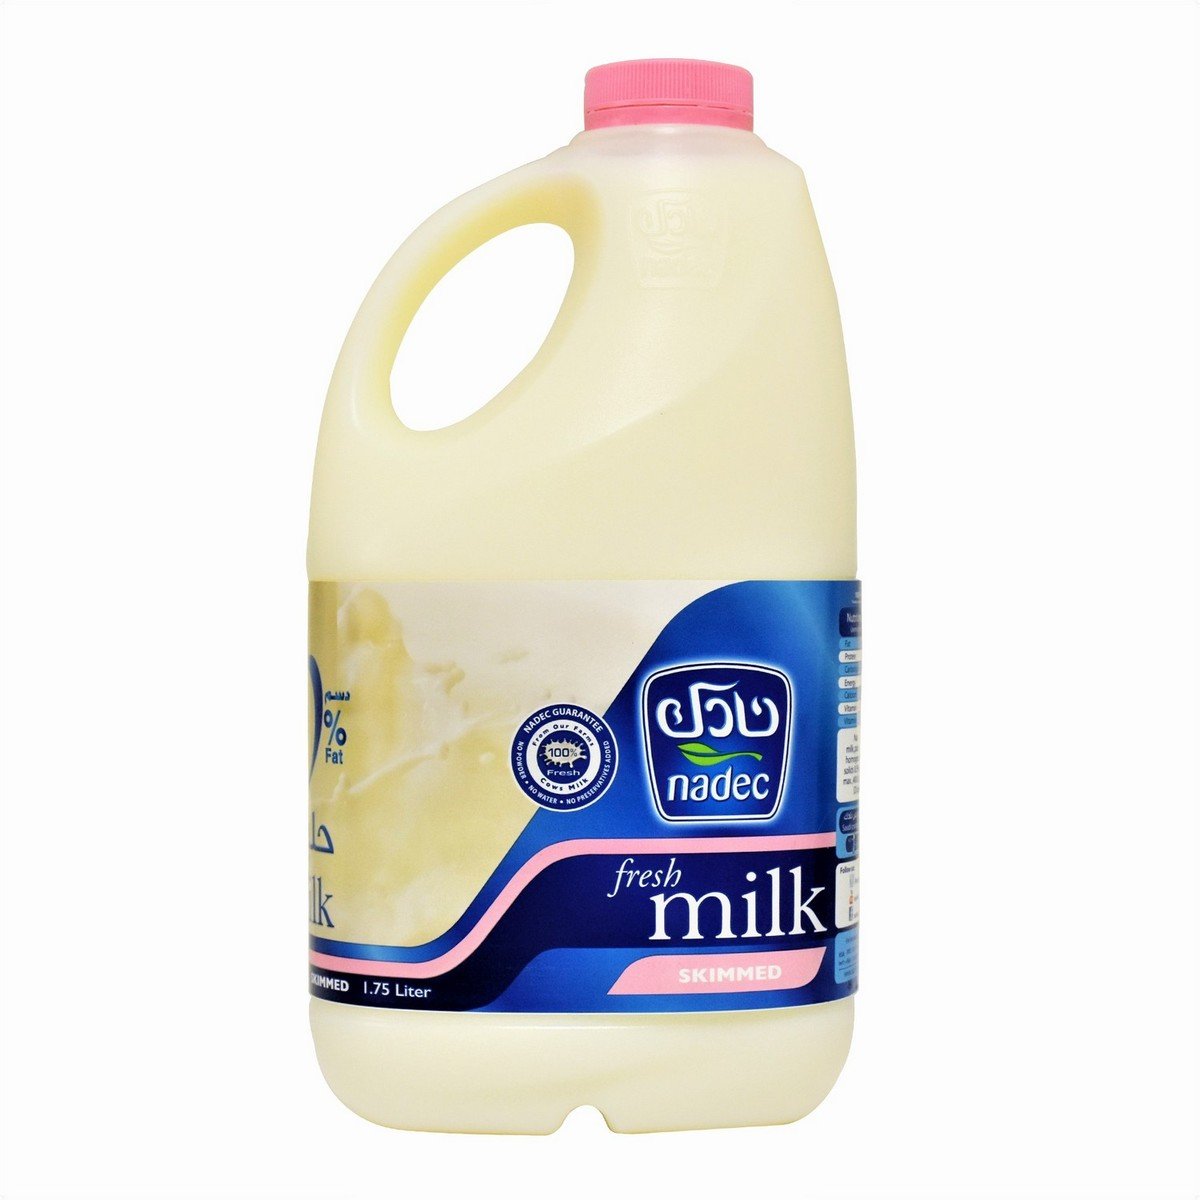 Nadec Skimmed Fresh Milk 1.75Litre